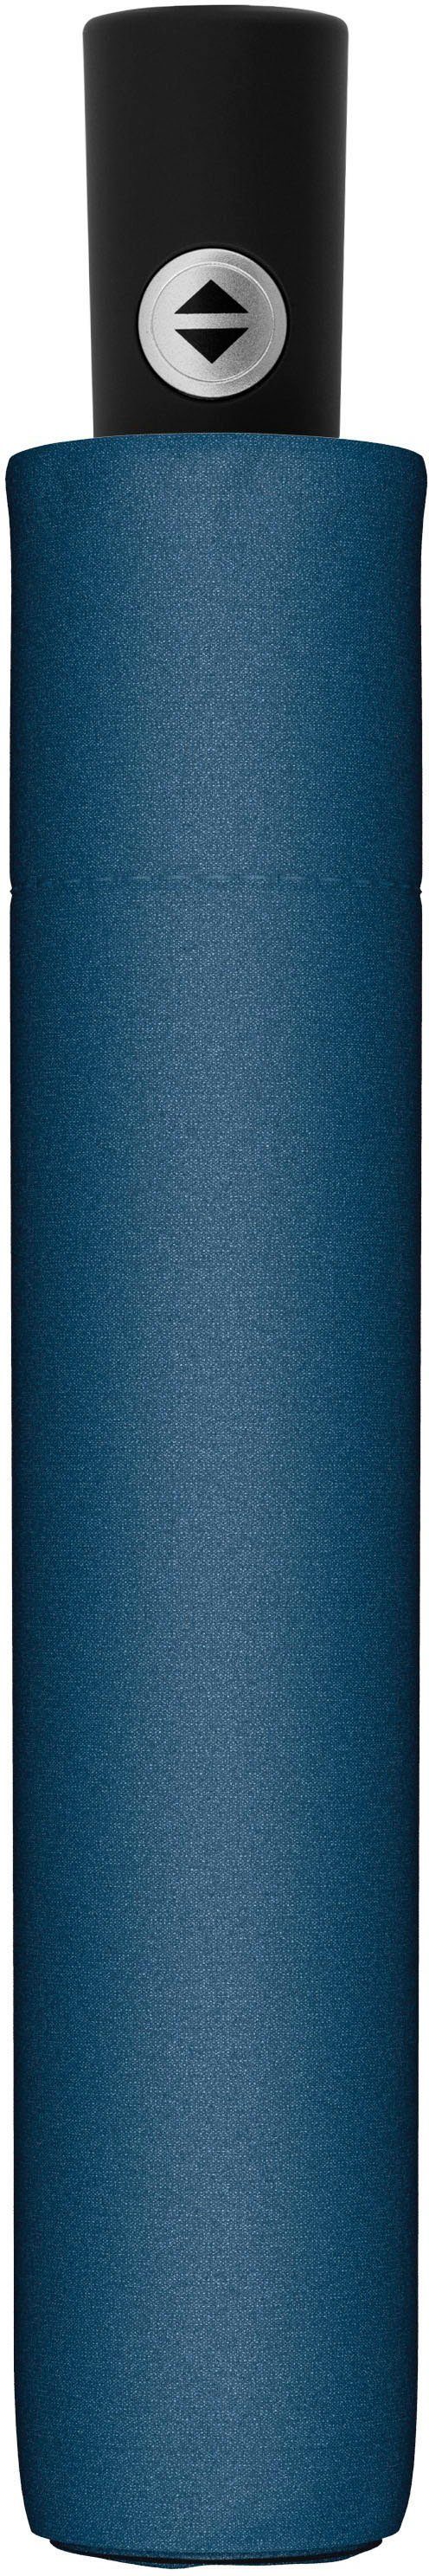 doppler® Taschenregenschirm Smart fold blue uni, crystal